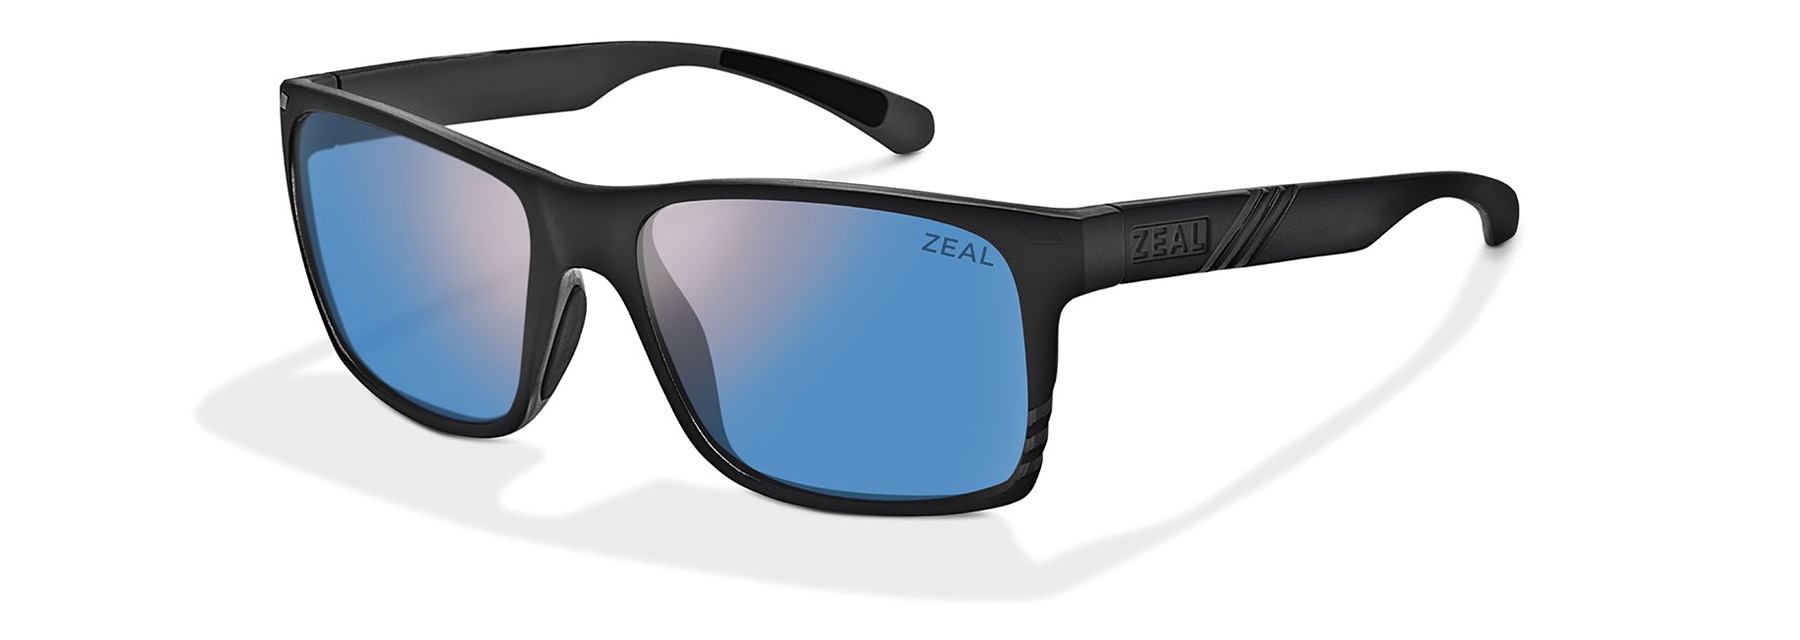 Shop BREWER (Z0414) Sunglasses by Zeal | Zeal Optics